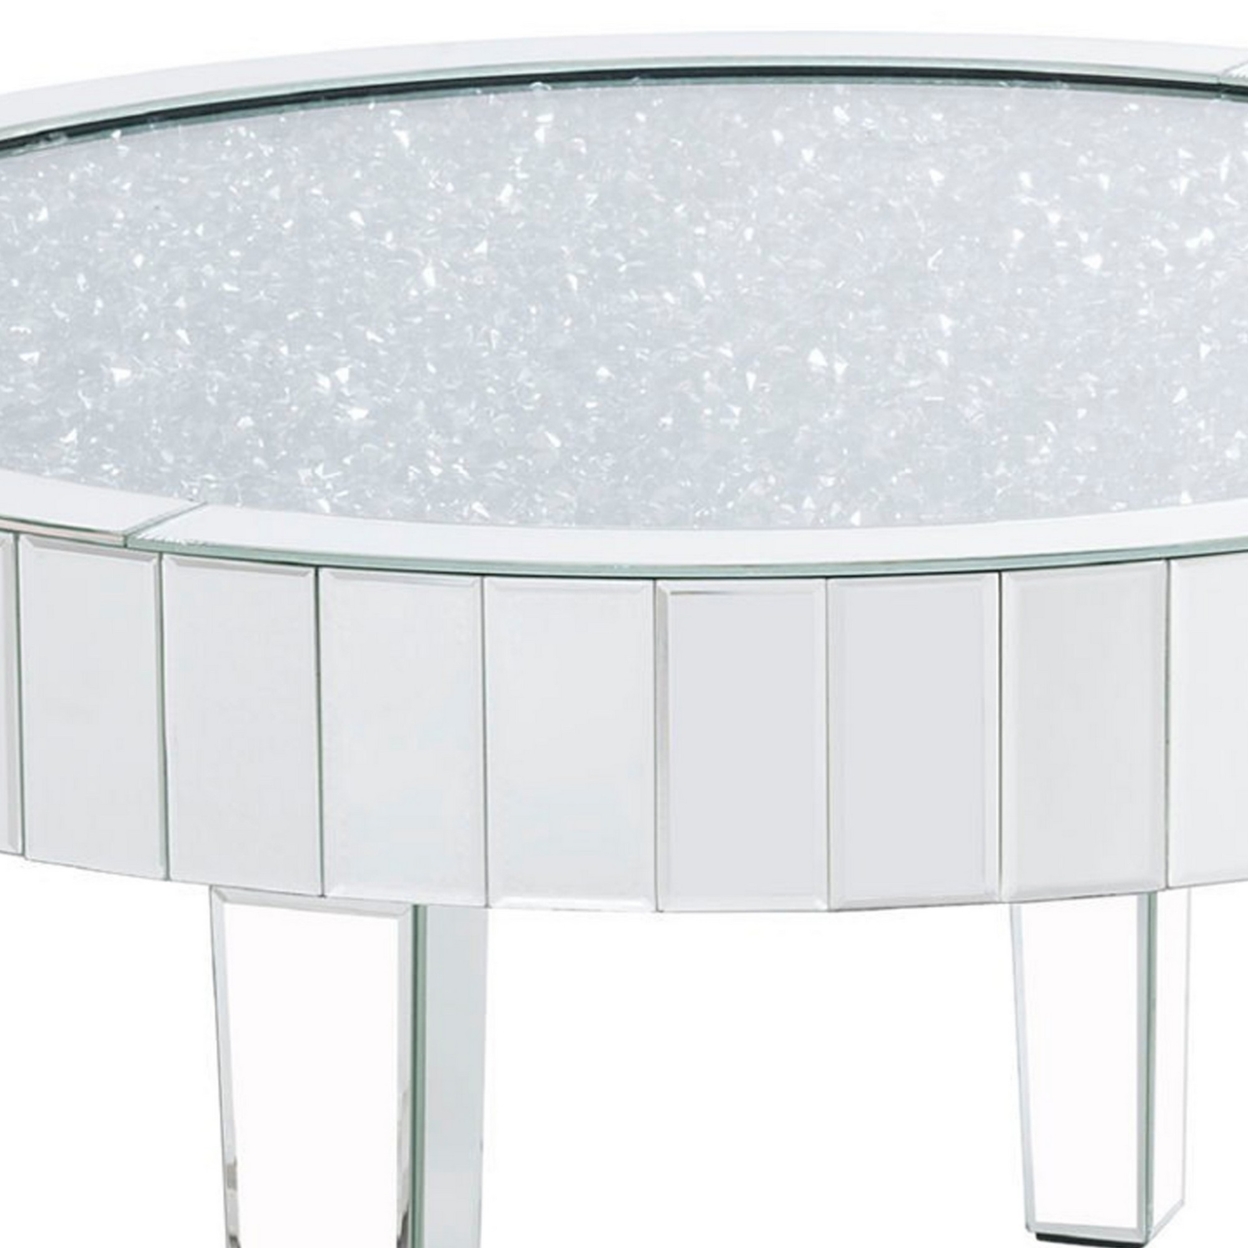 Coffee Table With Mirror Trim And Faux Diamond Inlays, Silver- Saltoro Sherpi